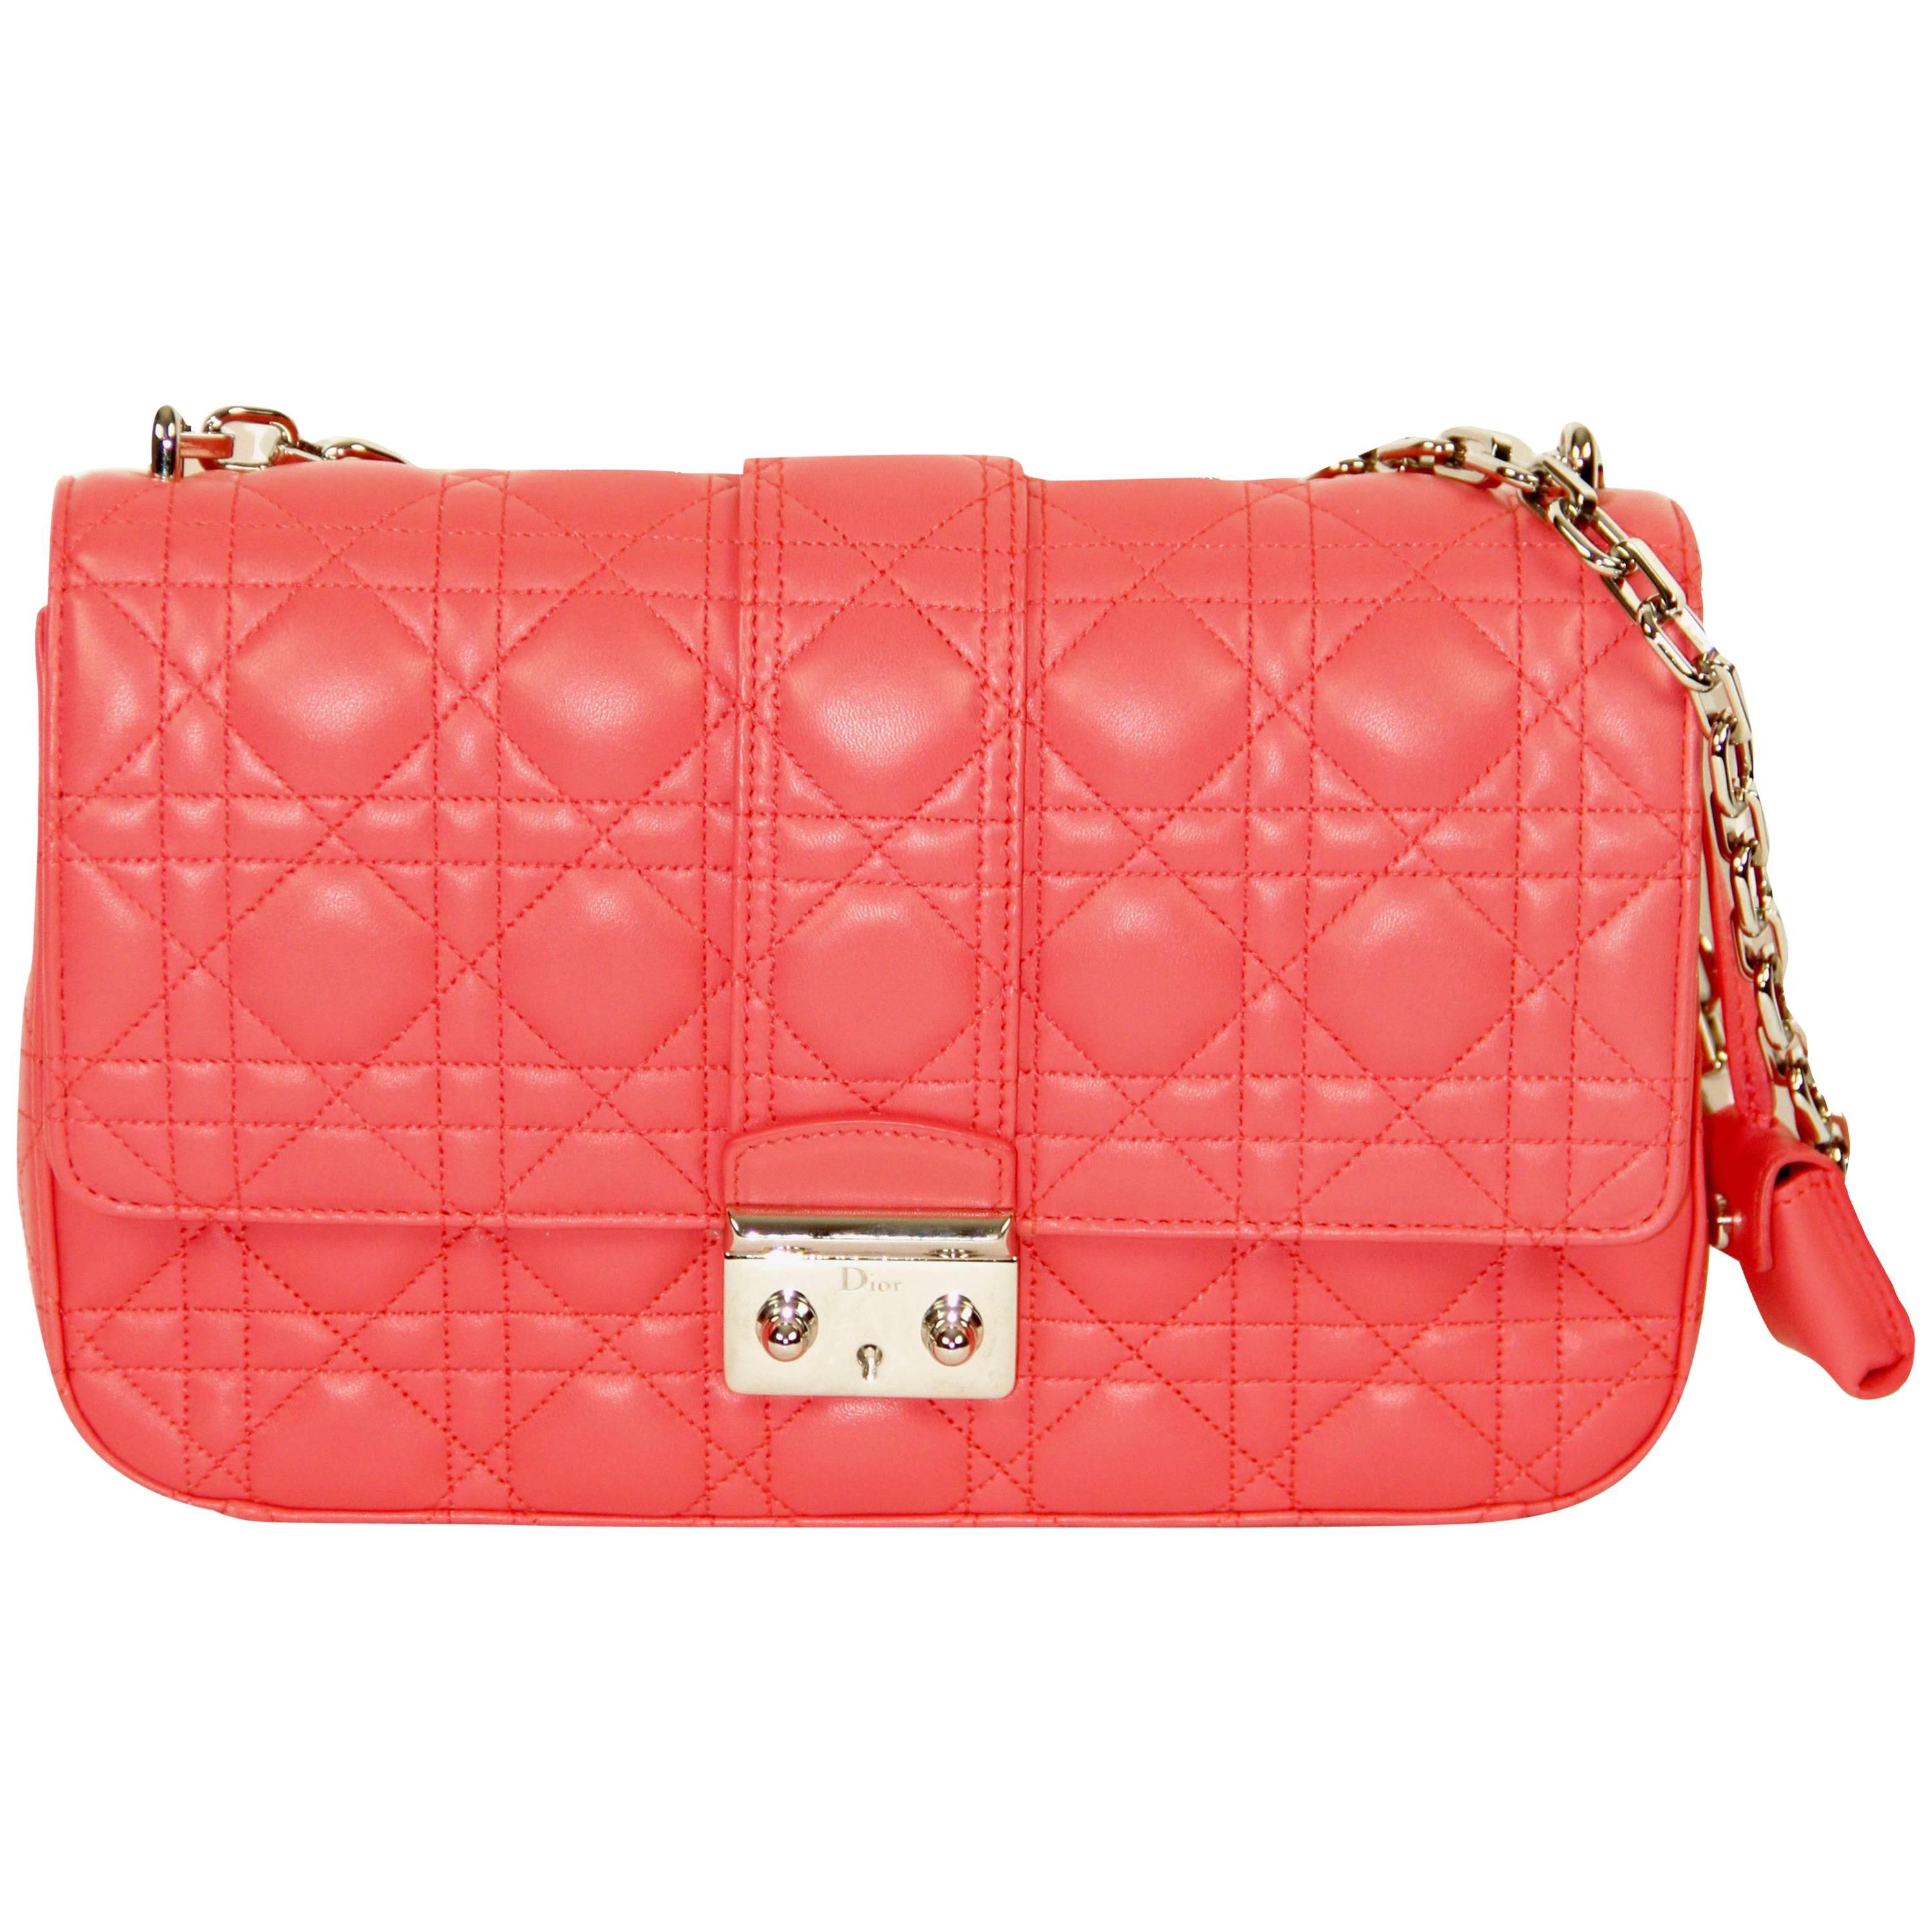 CHRISTIAN DIOR Miss Dior Pink Quilted Leather Shoulder Bag